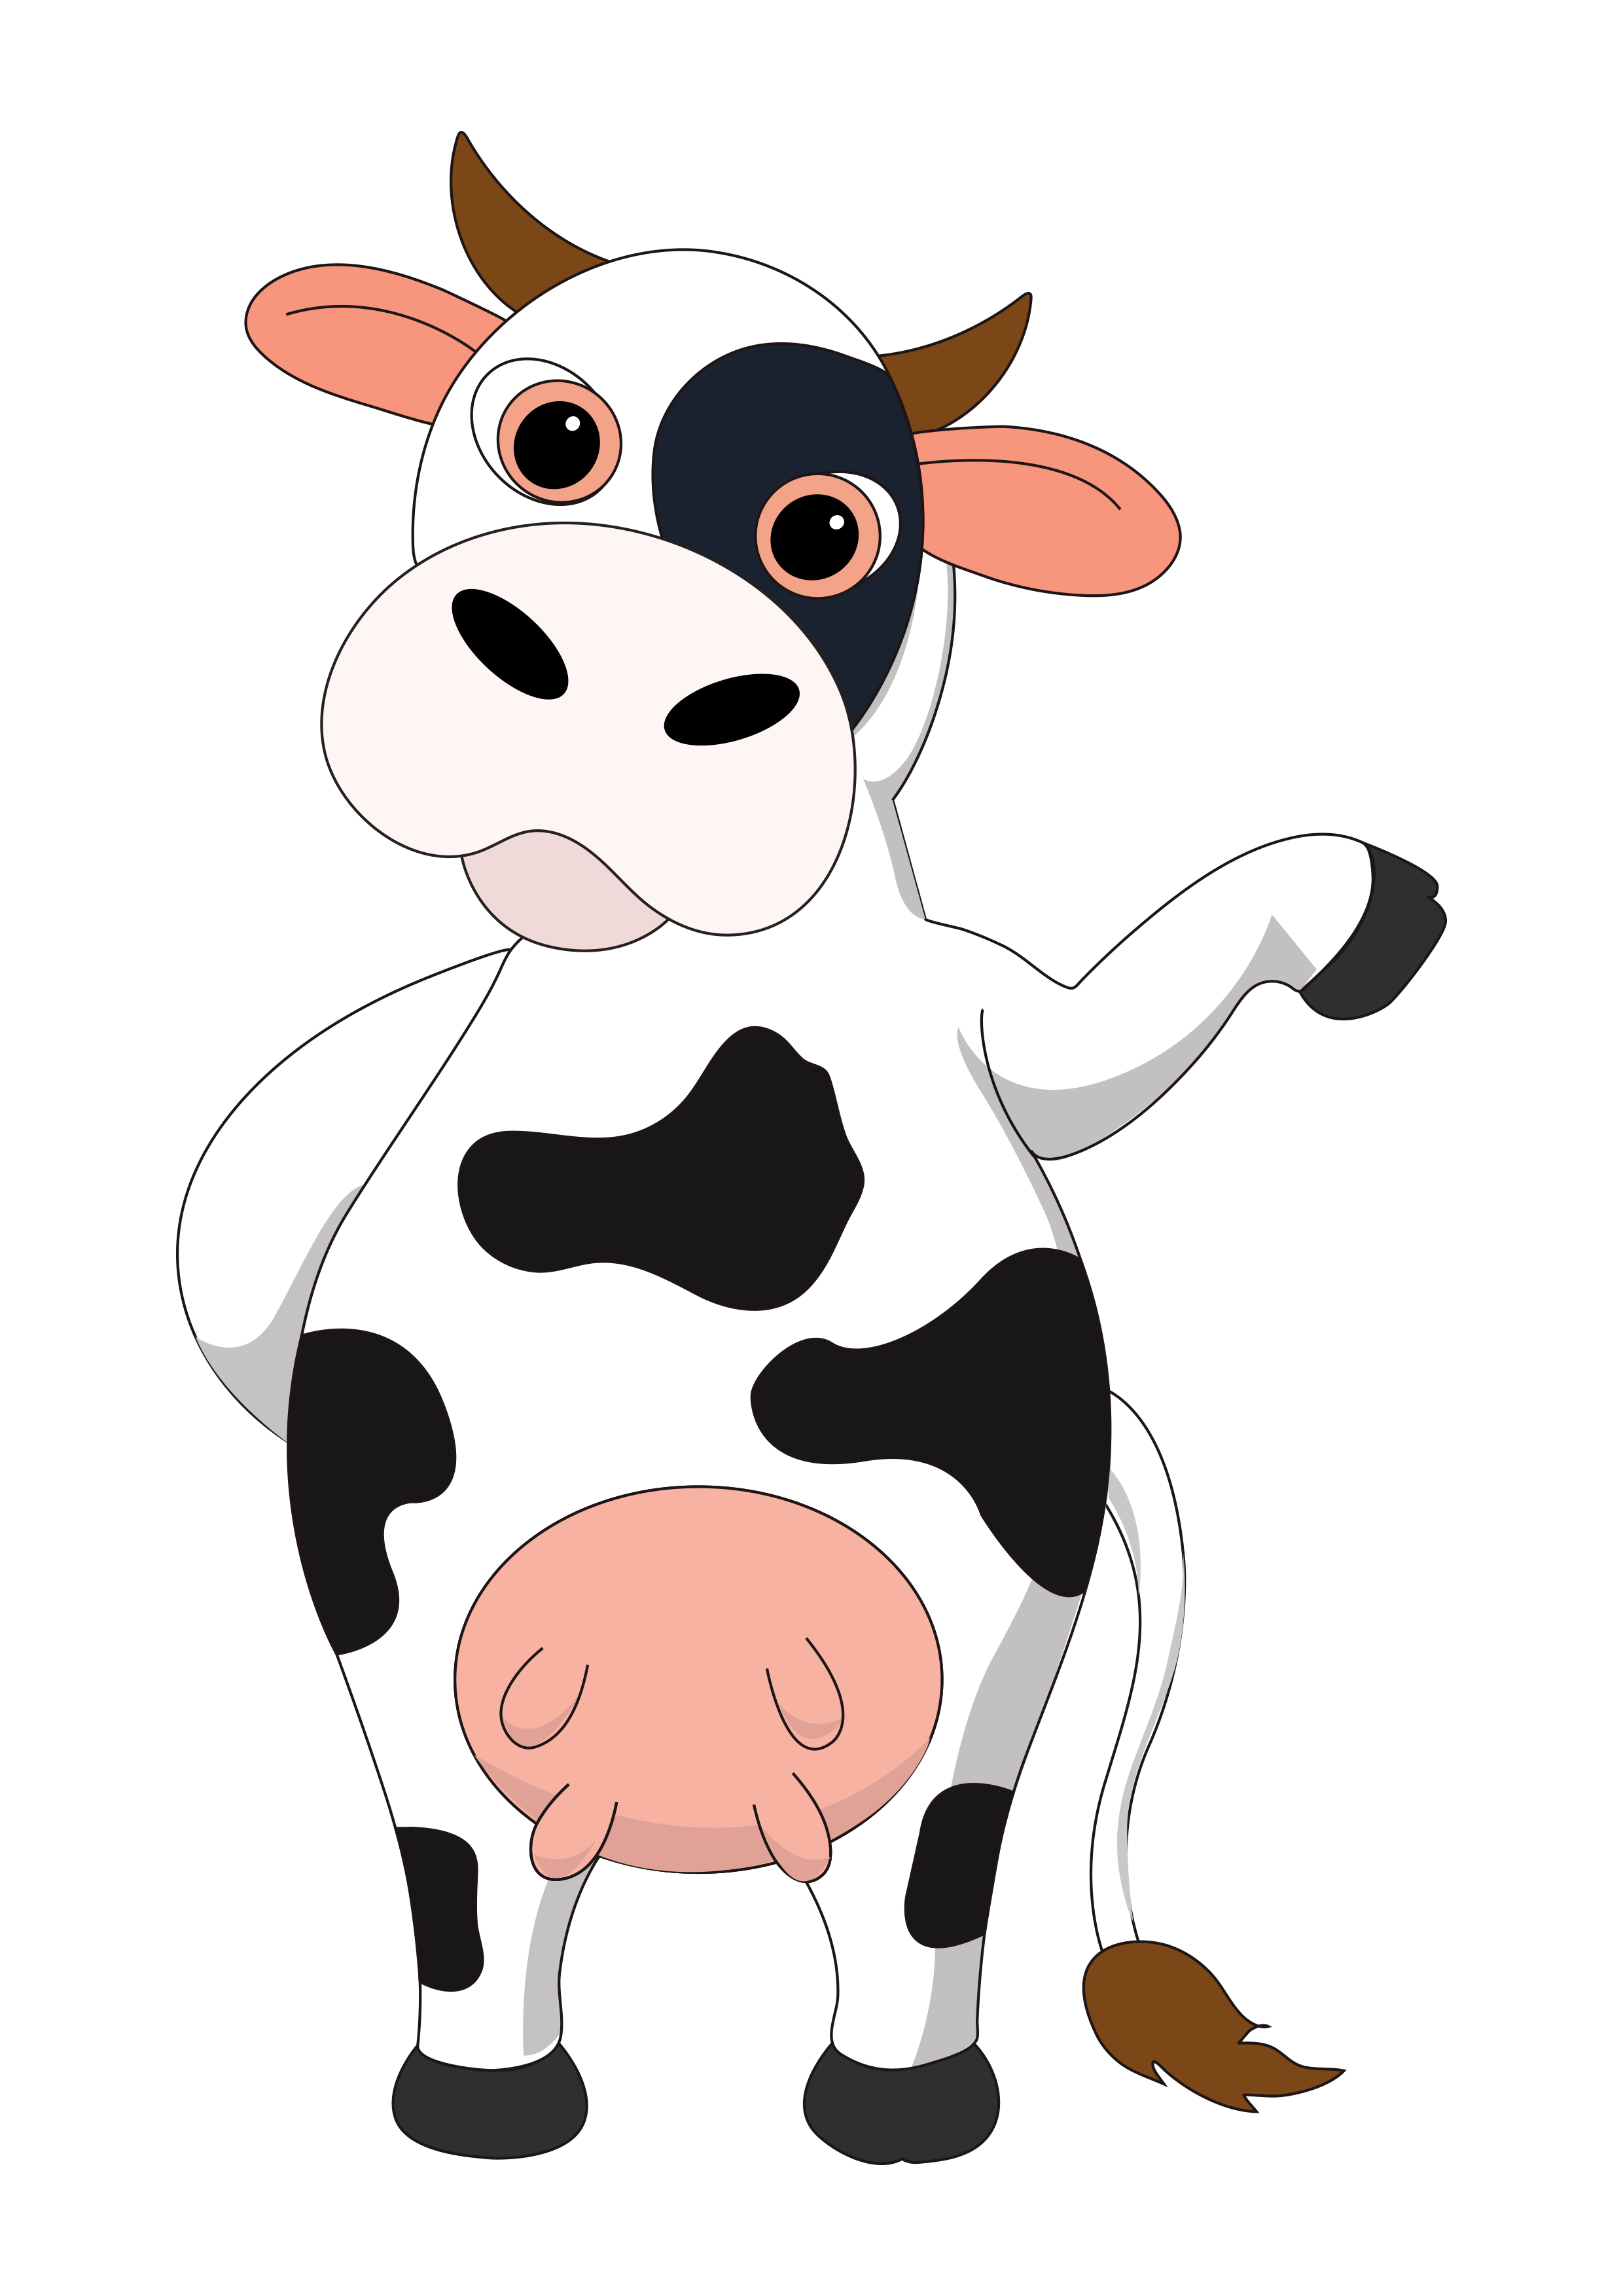 Cow Inu Website, Swap your CowInu from BSC